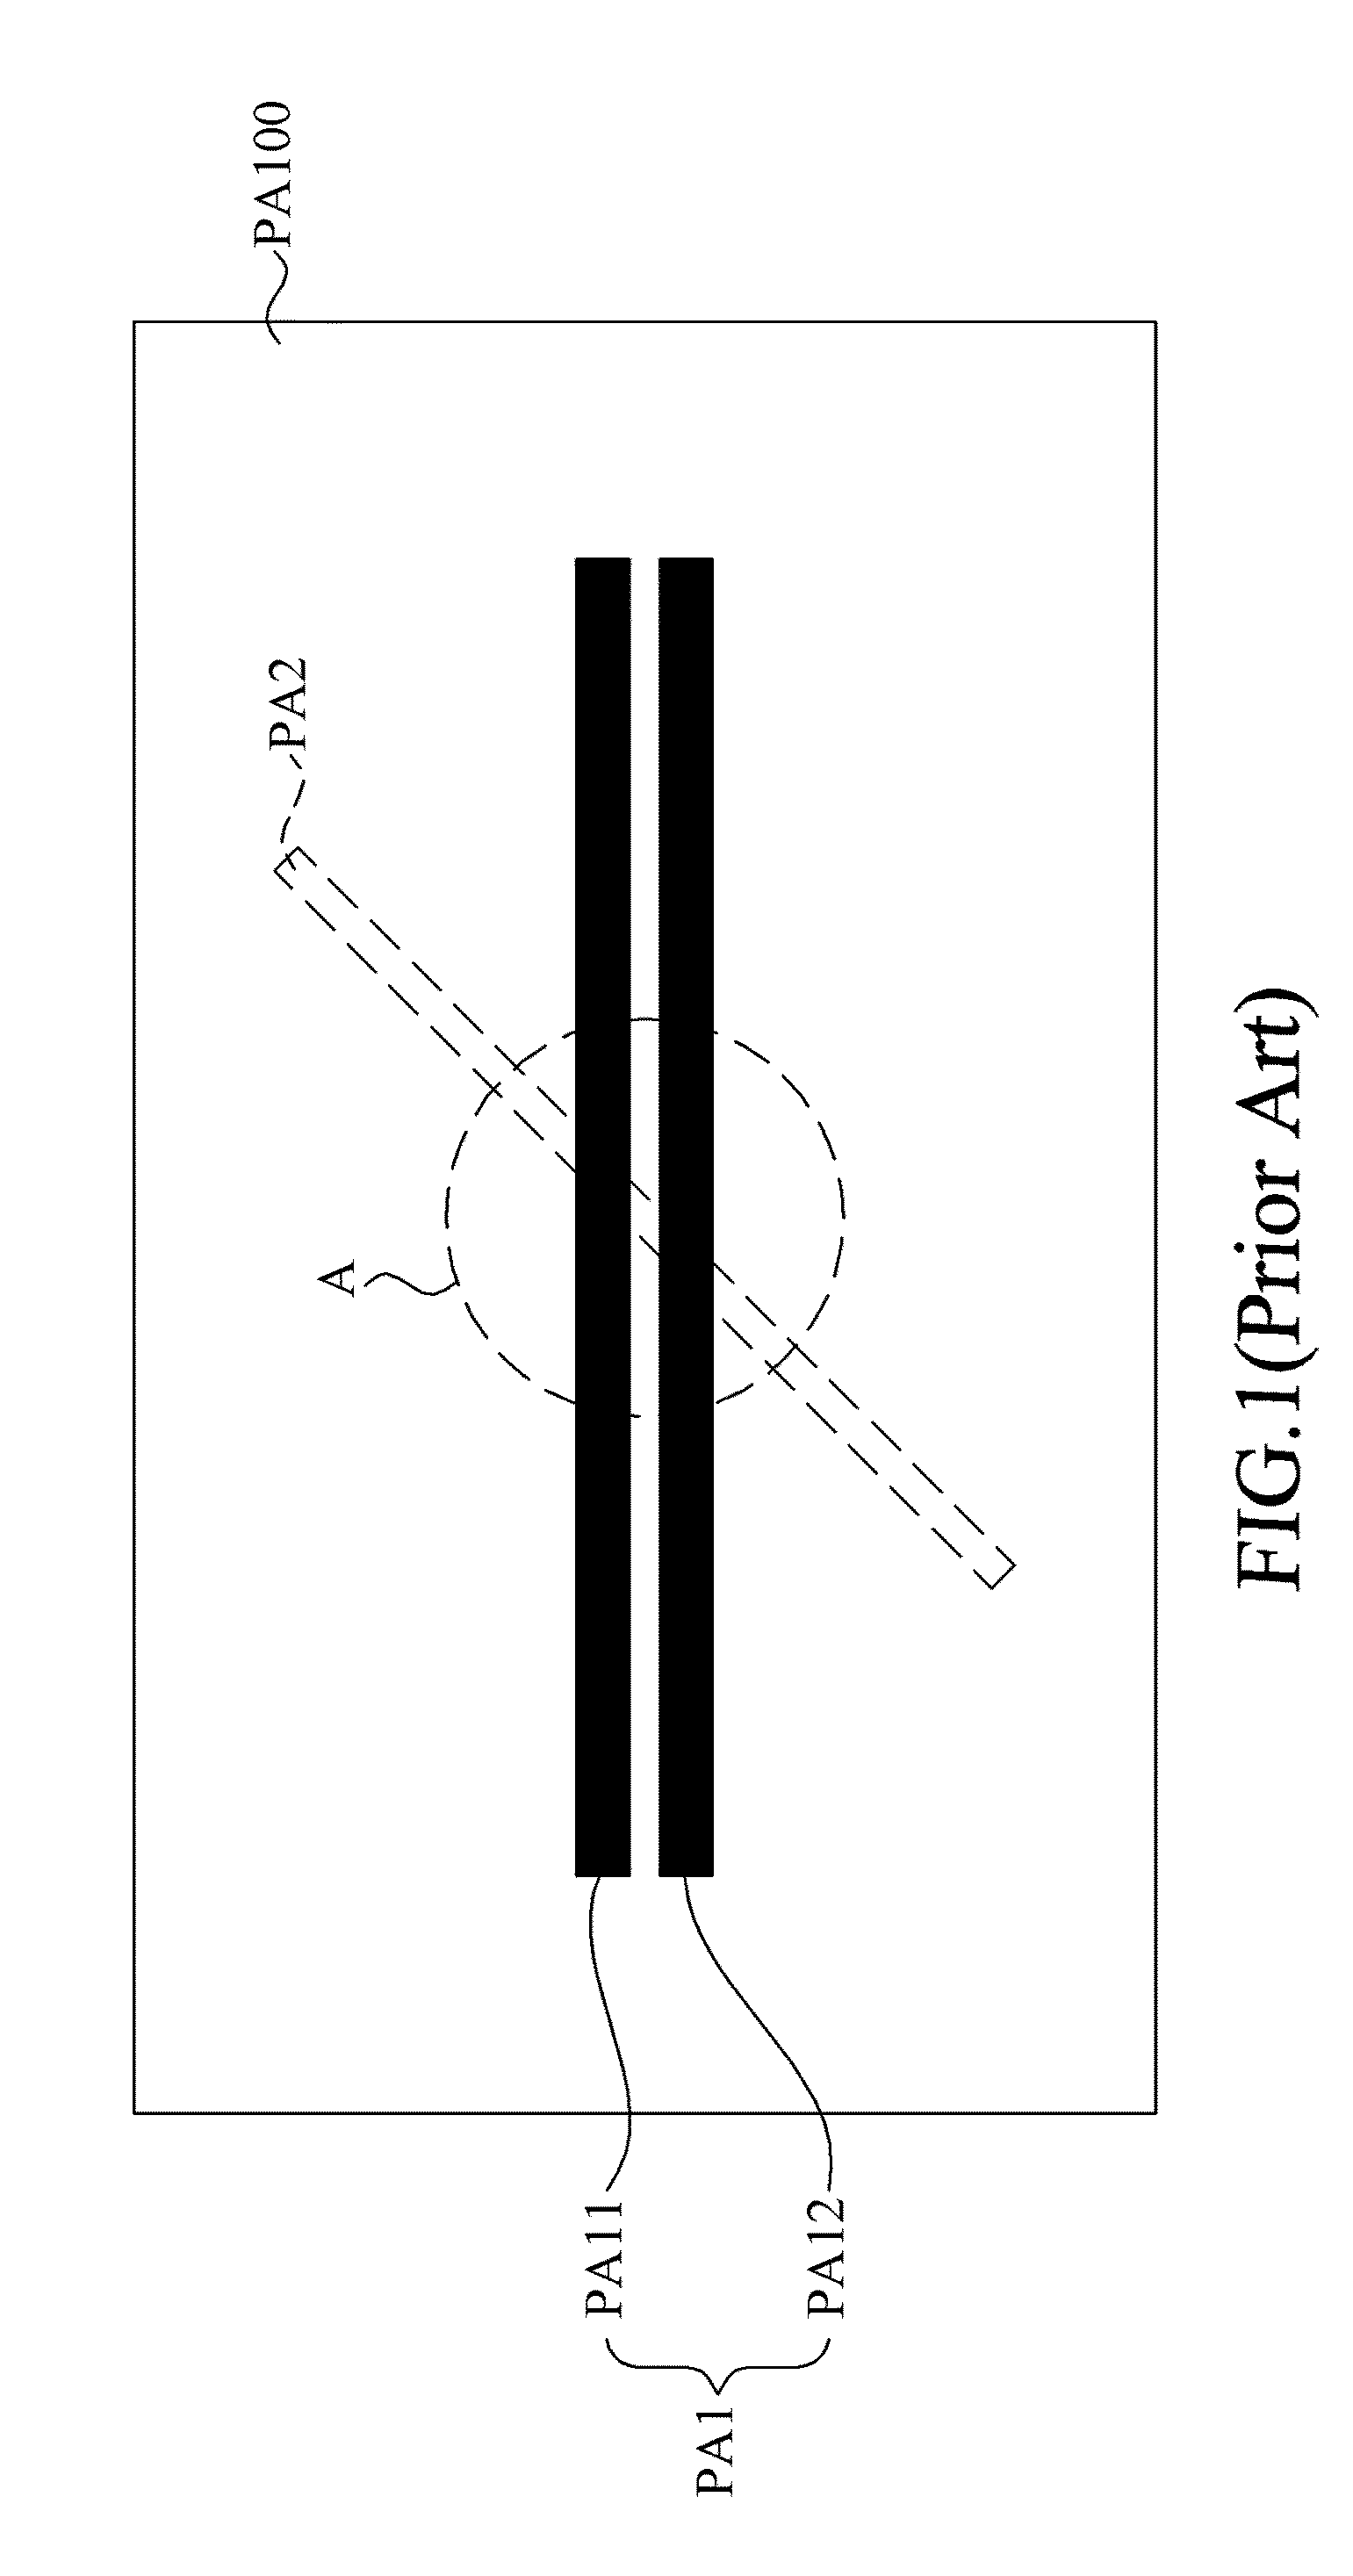 Transmission line structure